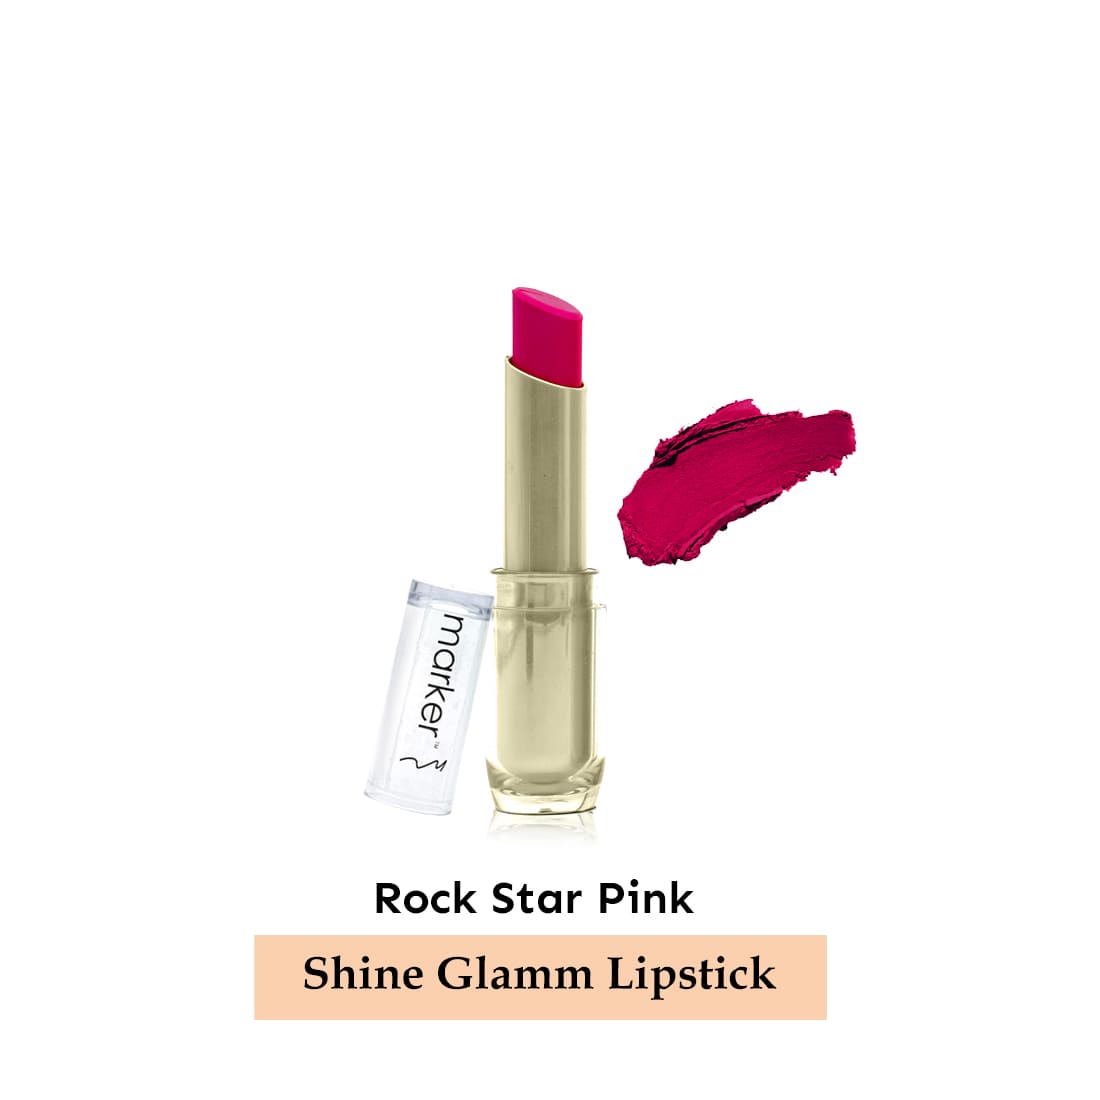 Shine Glamm Lipstick